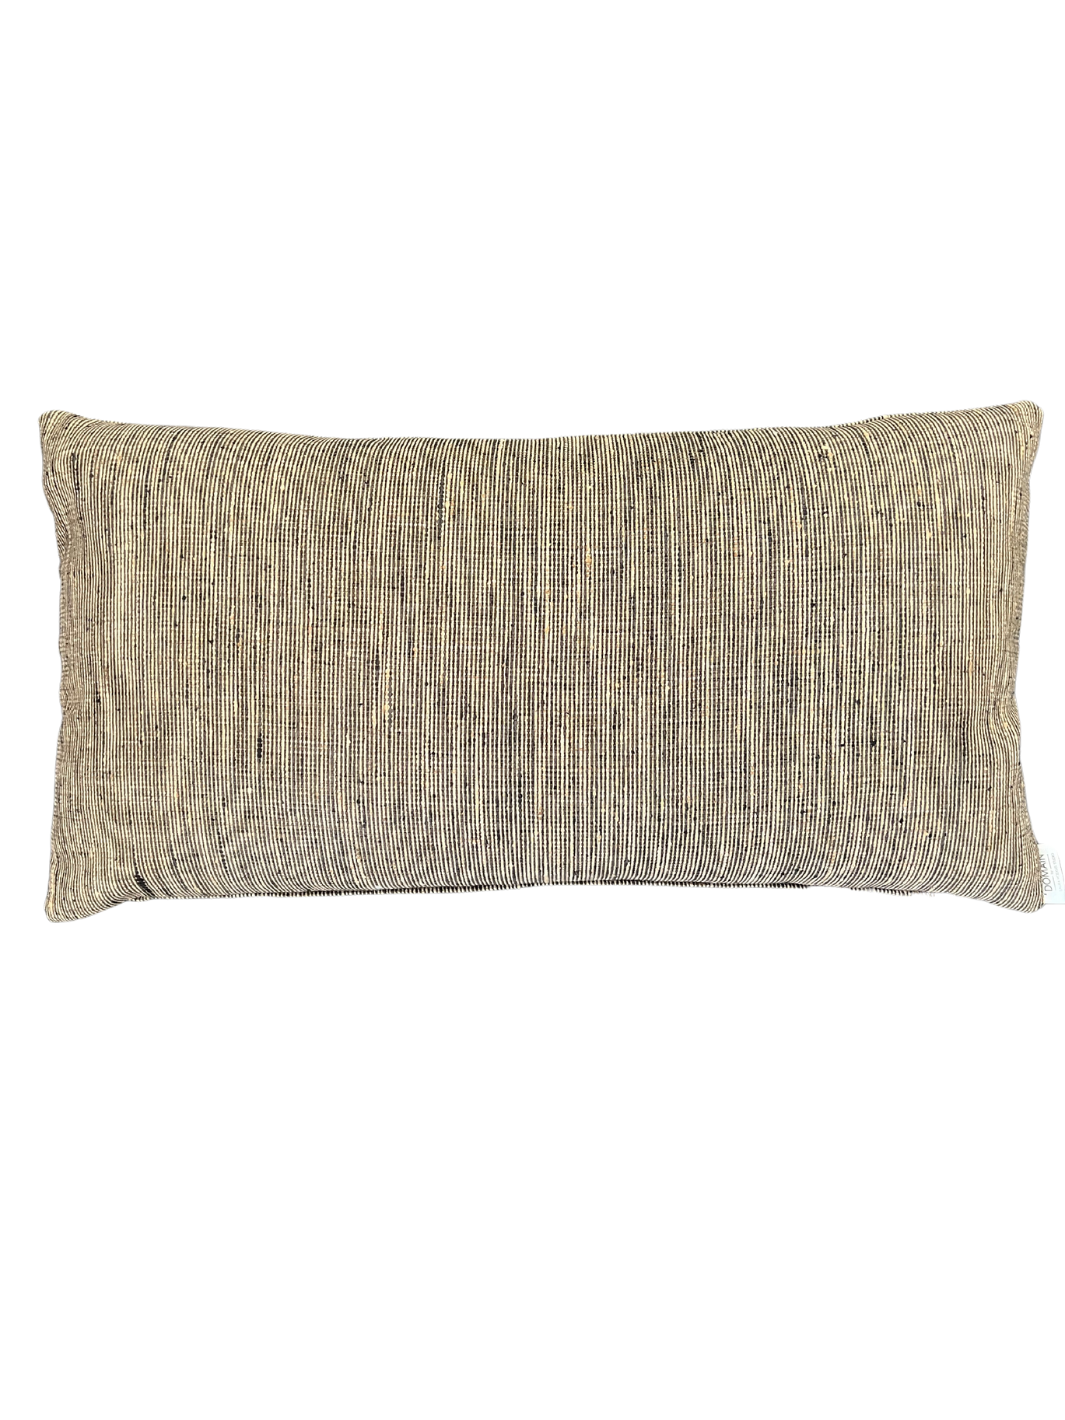 Dark Brown Woven Lumbar Pillow